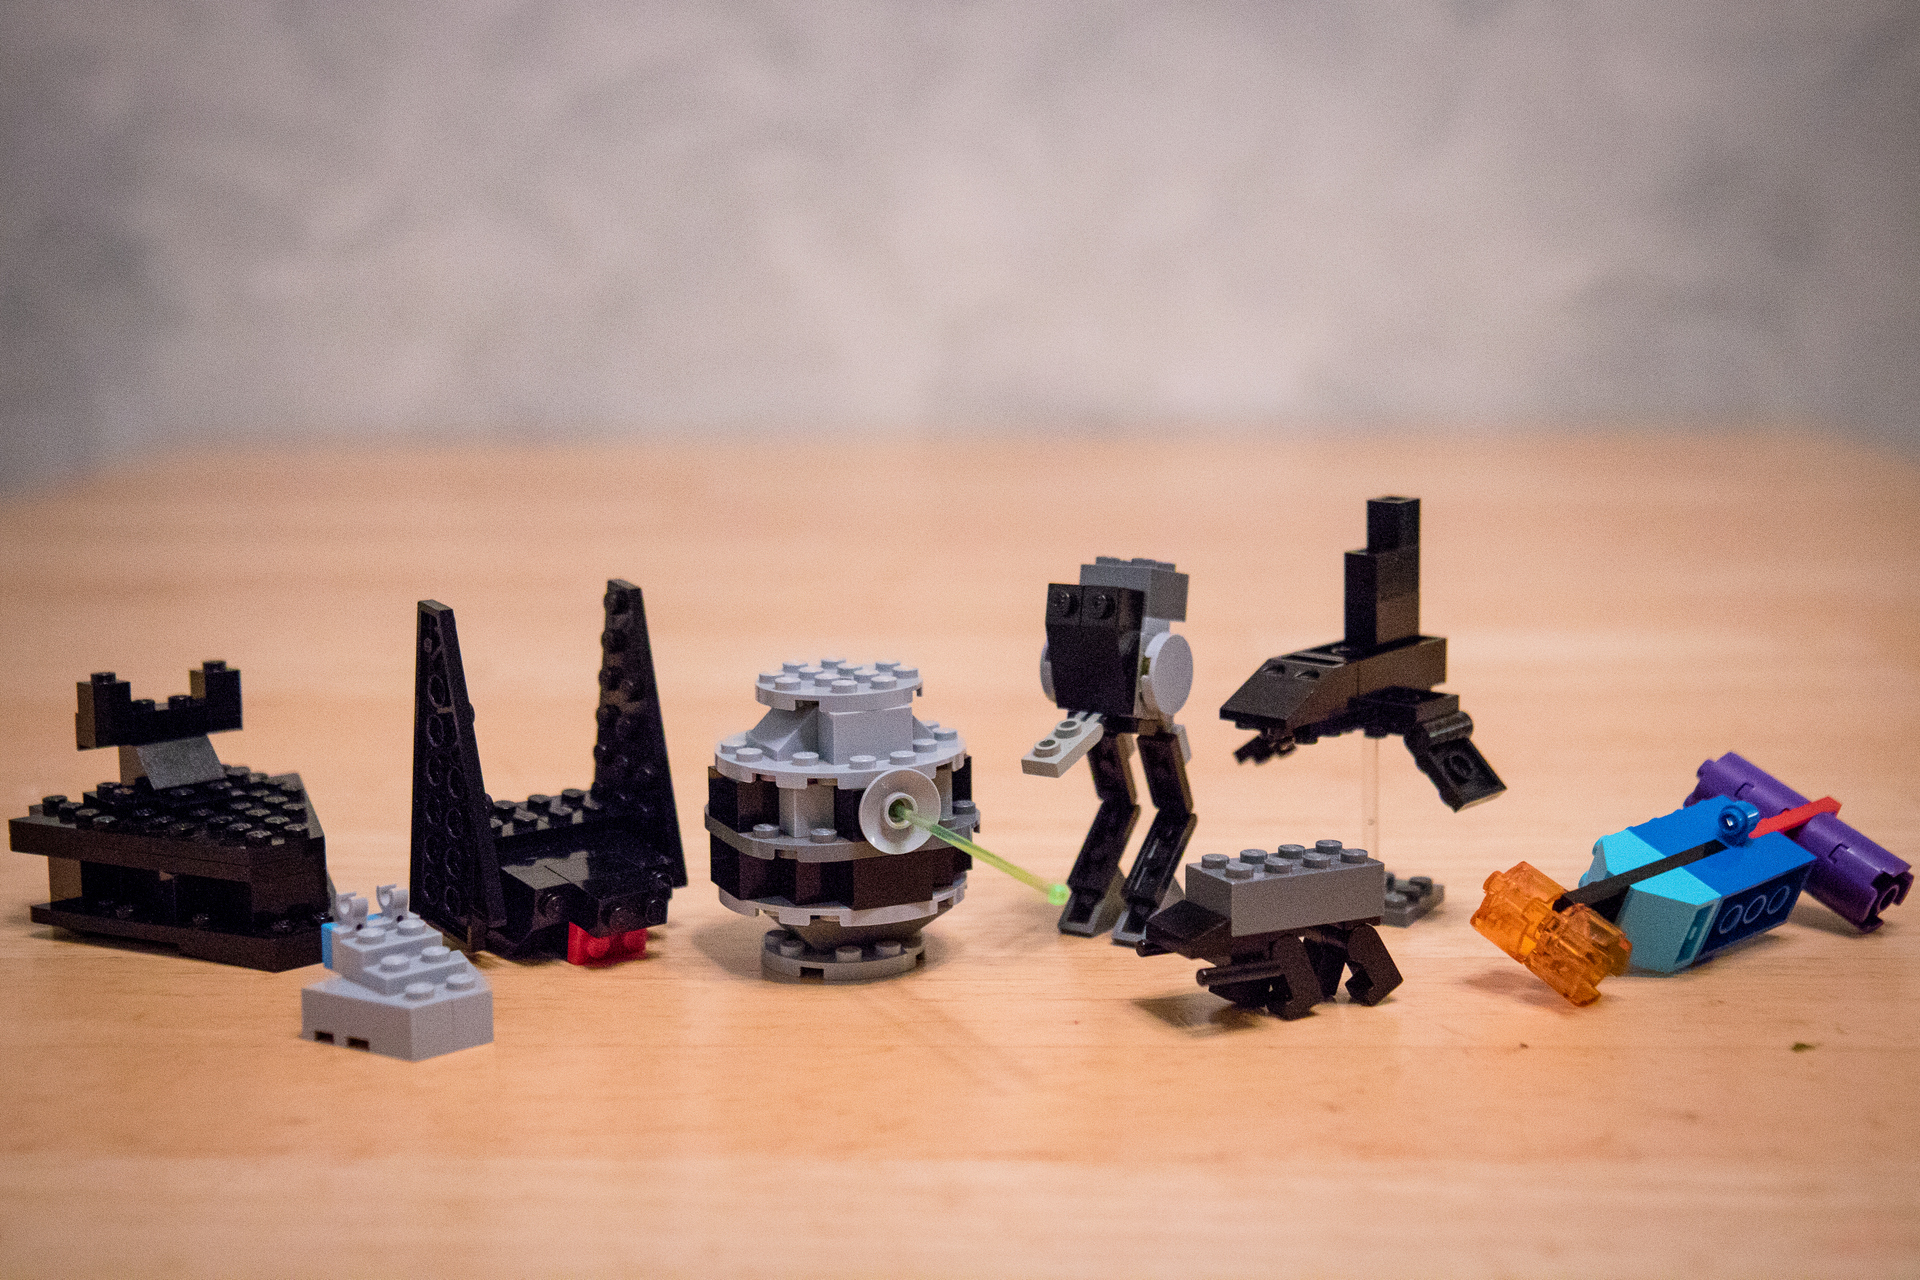 001 LEGO Microscale Star Wars Ships